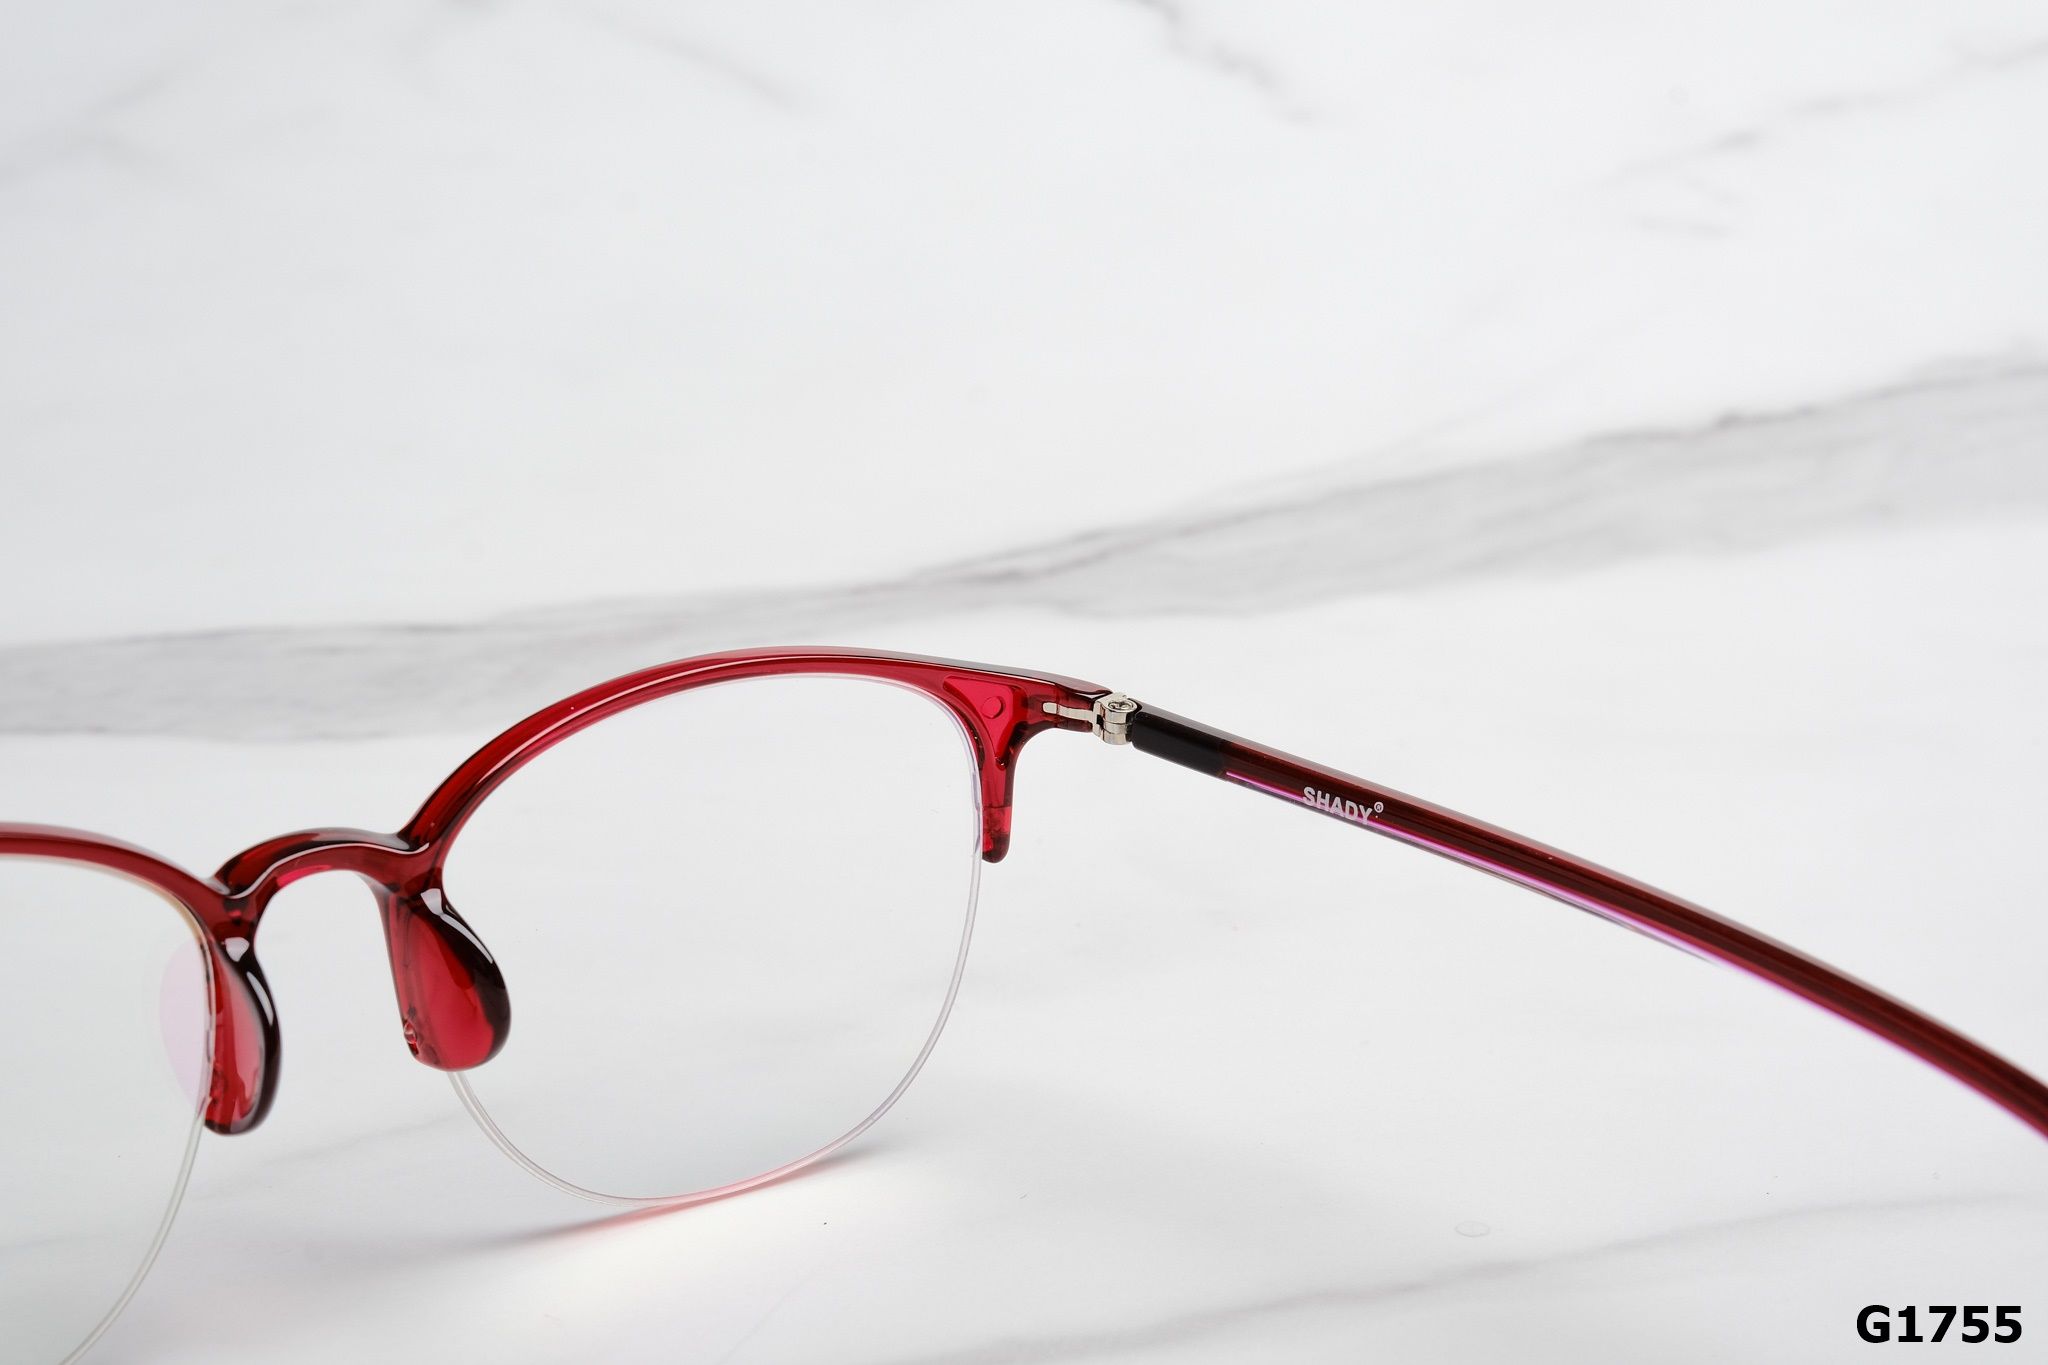  SHADY Eyewear - Glasses - G1755 